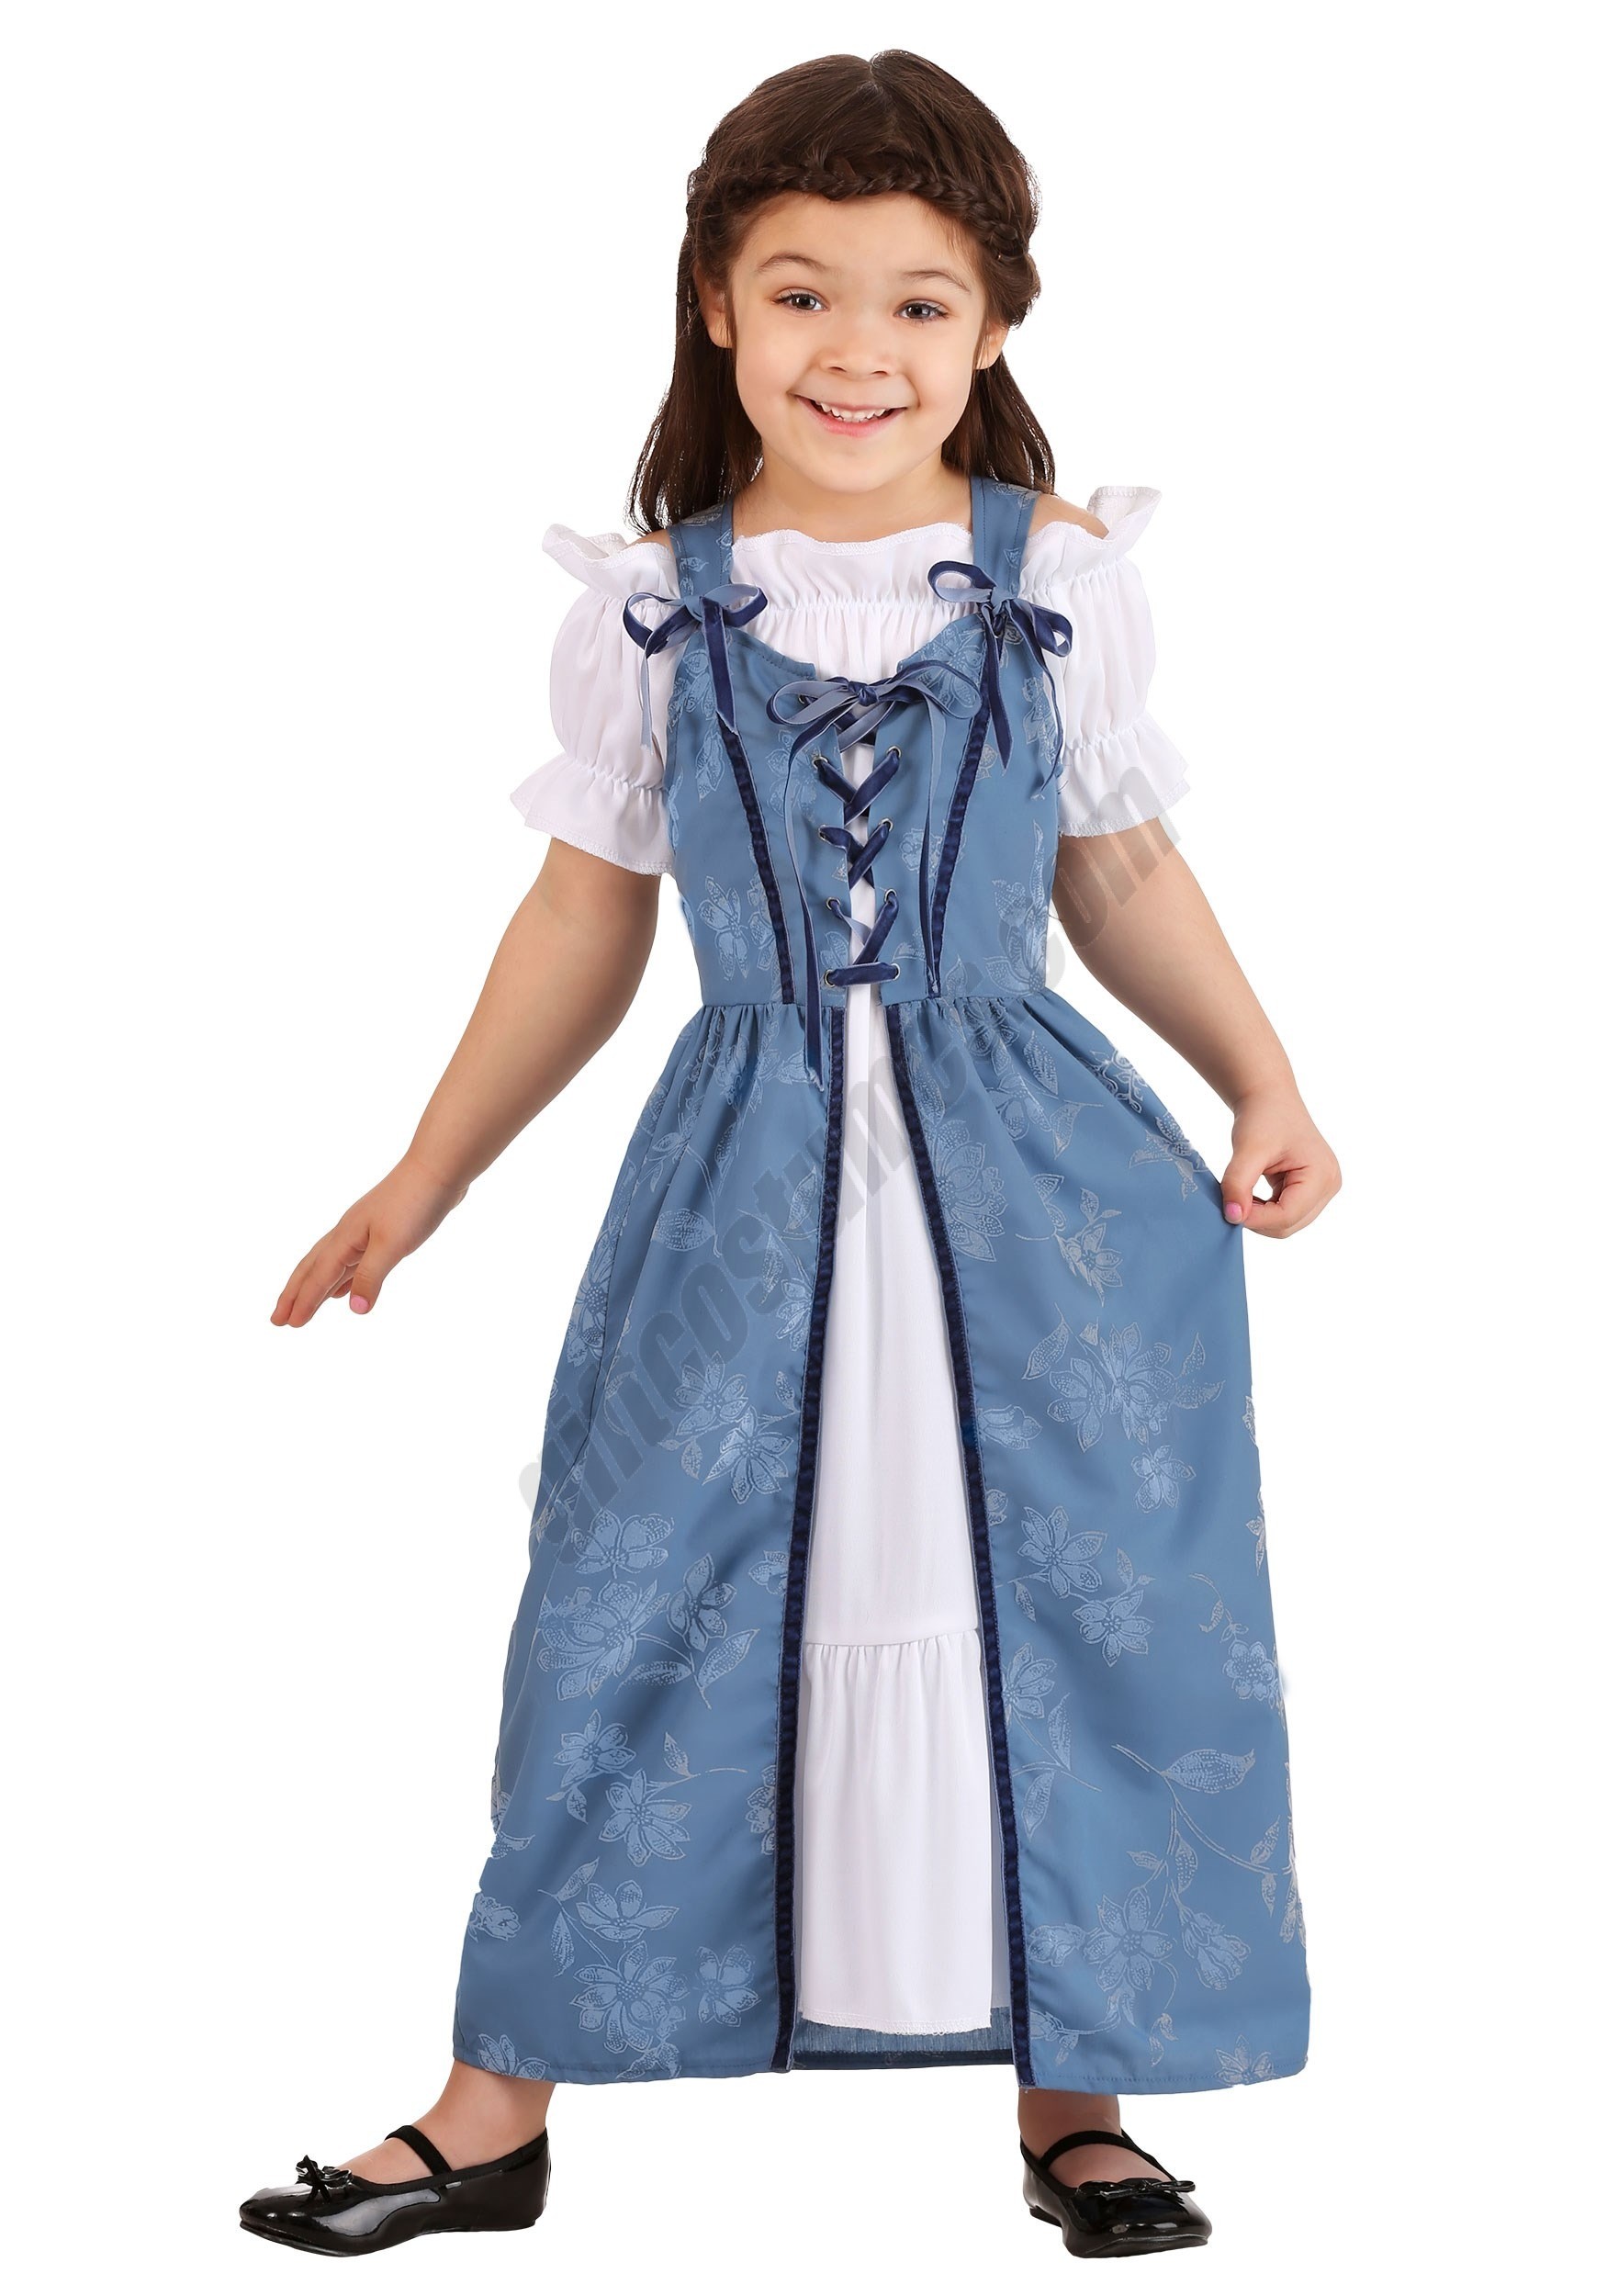 Toddler Girls Renaissance Villager Costume Promotions - Toddler Girls Renaissance Villager Costume Promotions